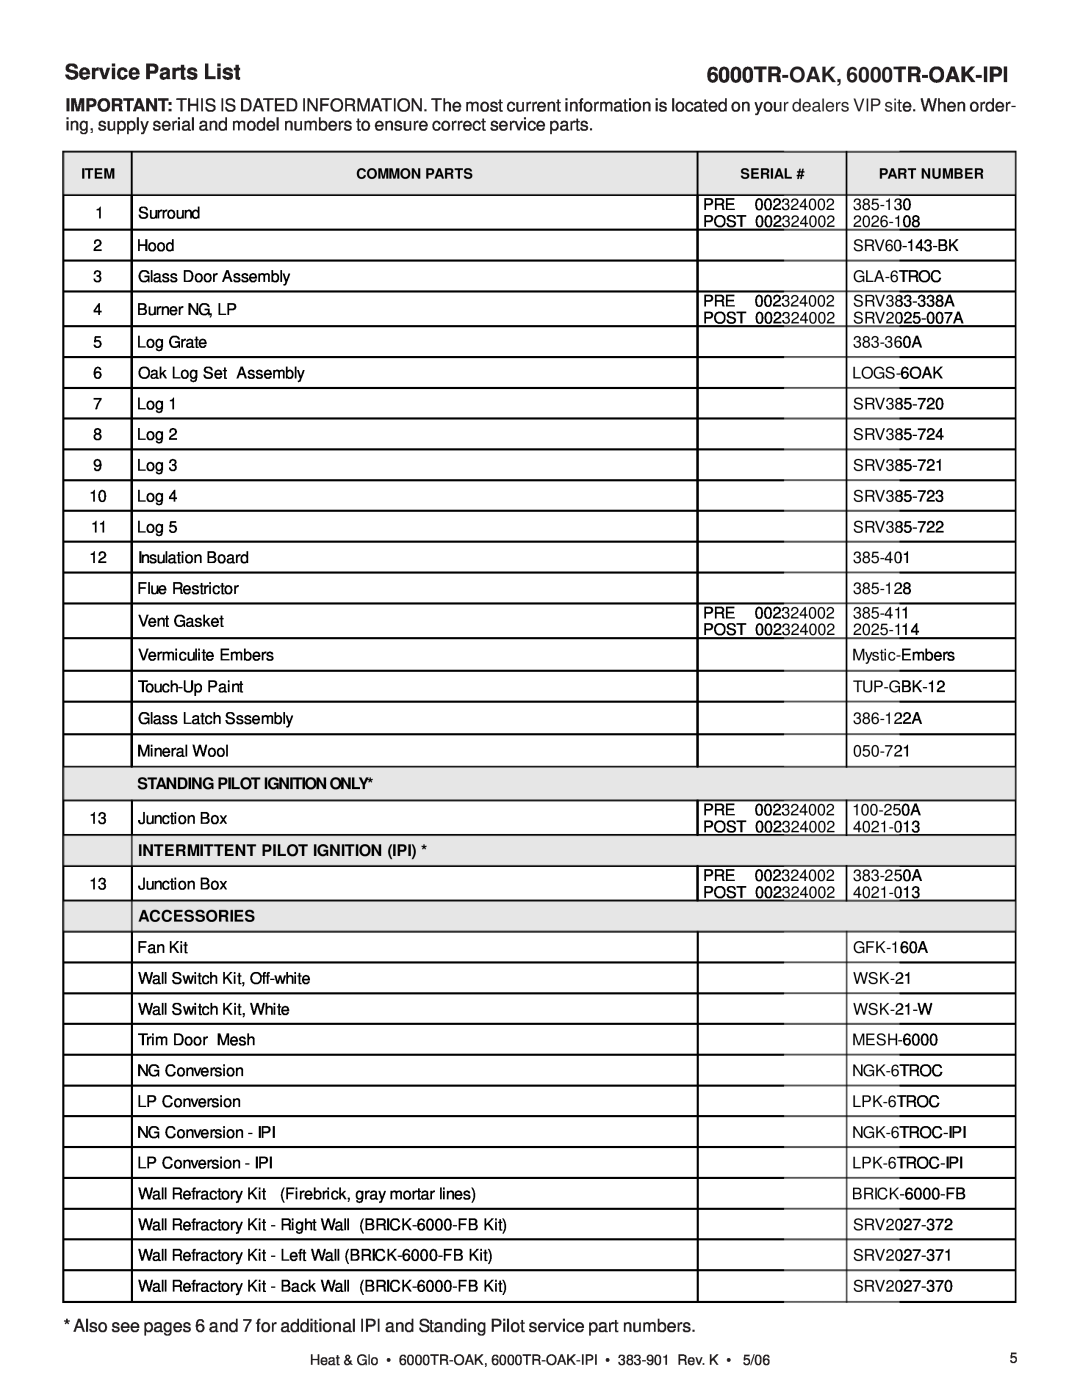 Heat & Glo LifeStyle Service Parts List, 6000TR-OAK, 6000TR-OAK-IPI, Standing Pilot Ignition Only, Accessories 